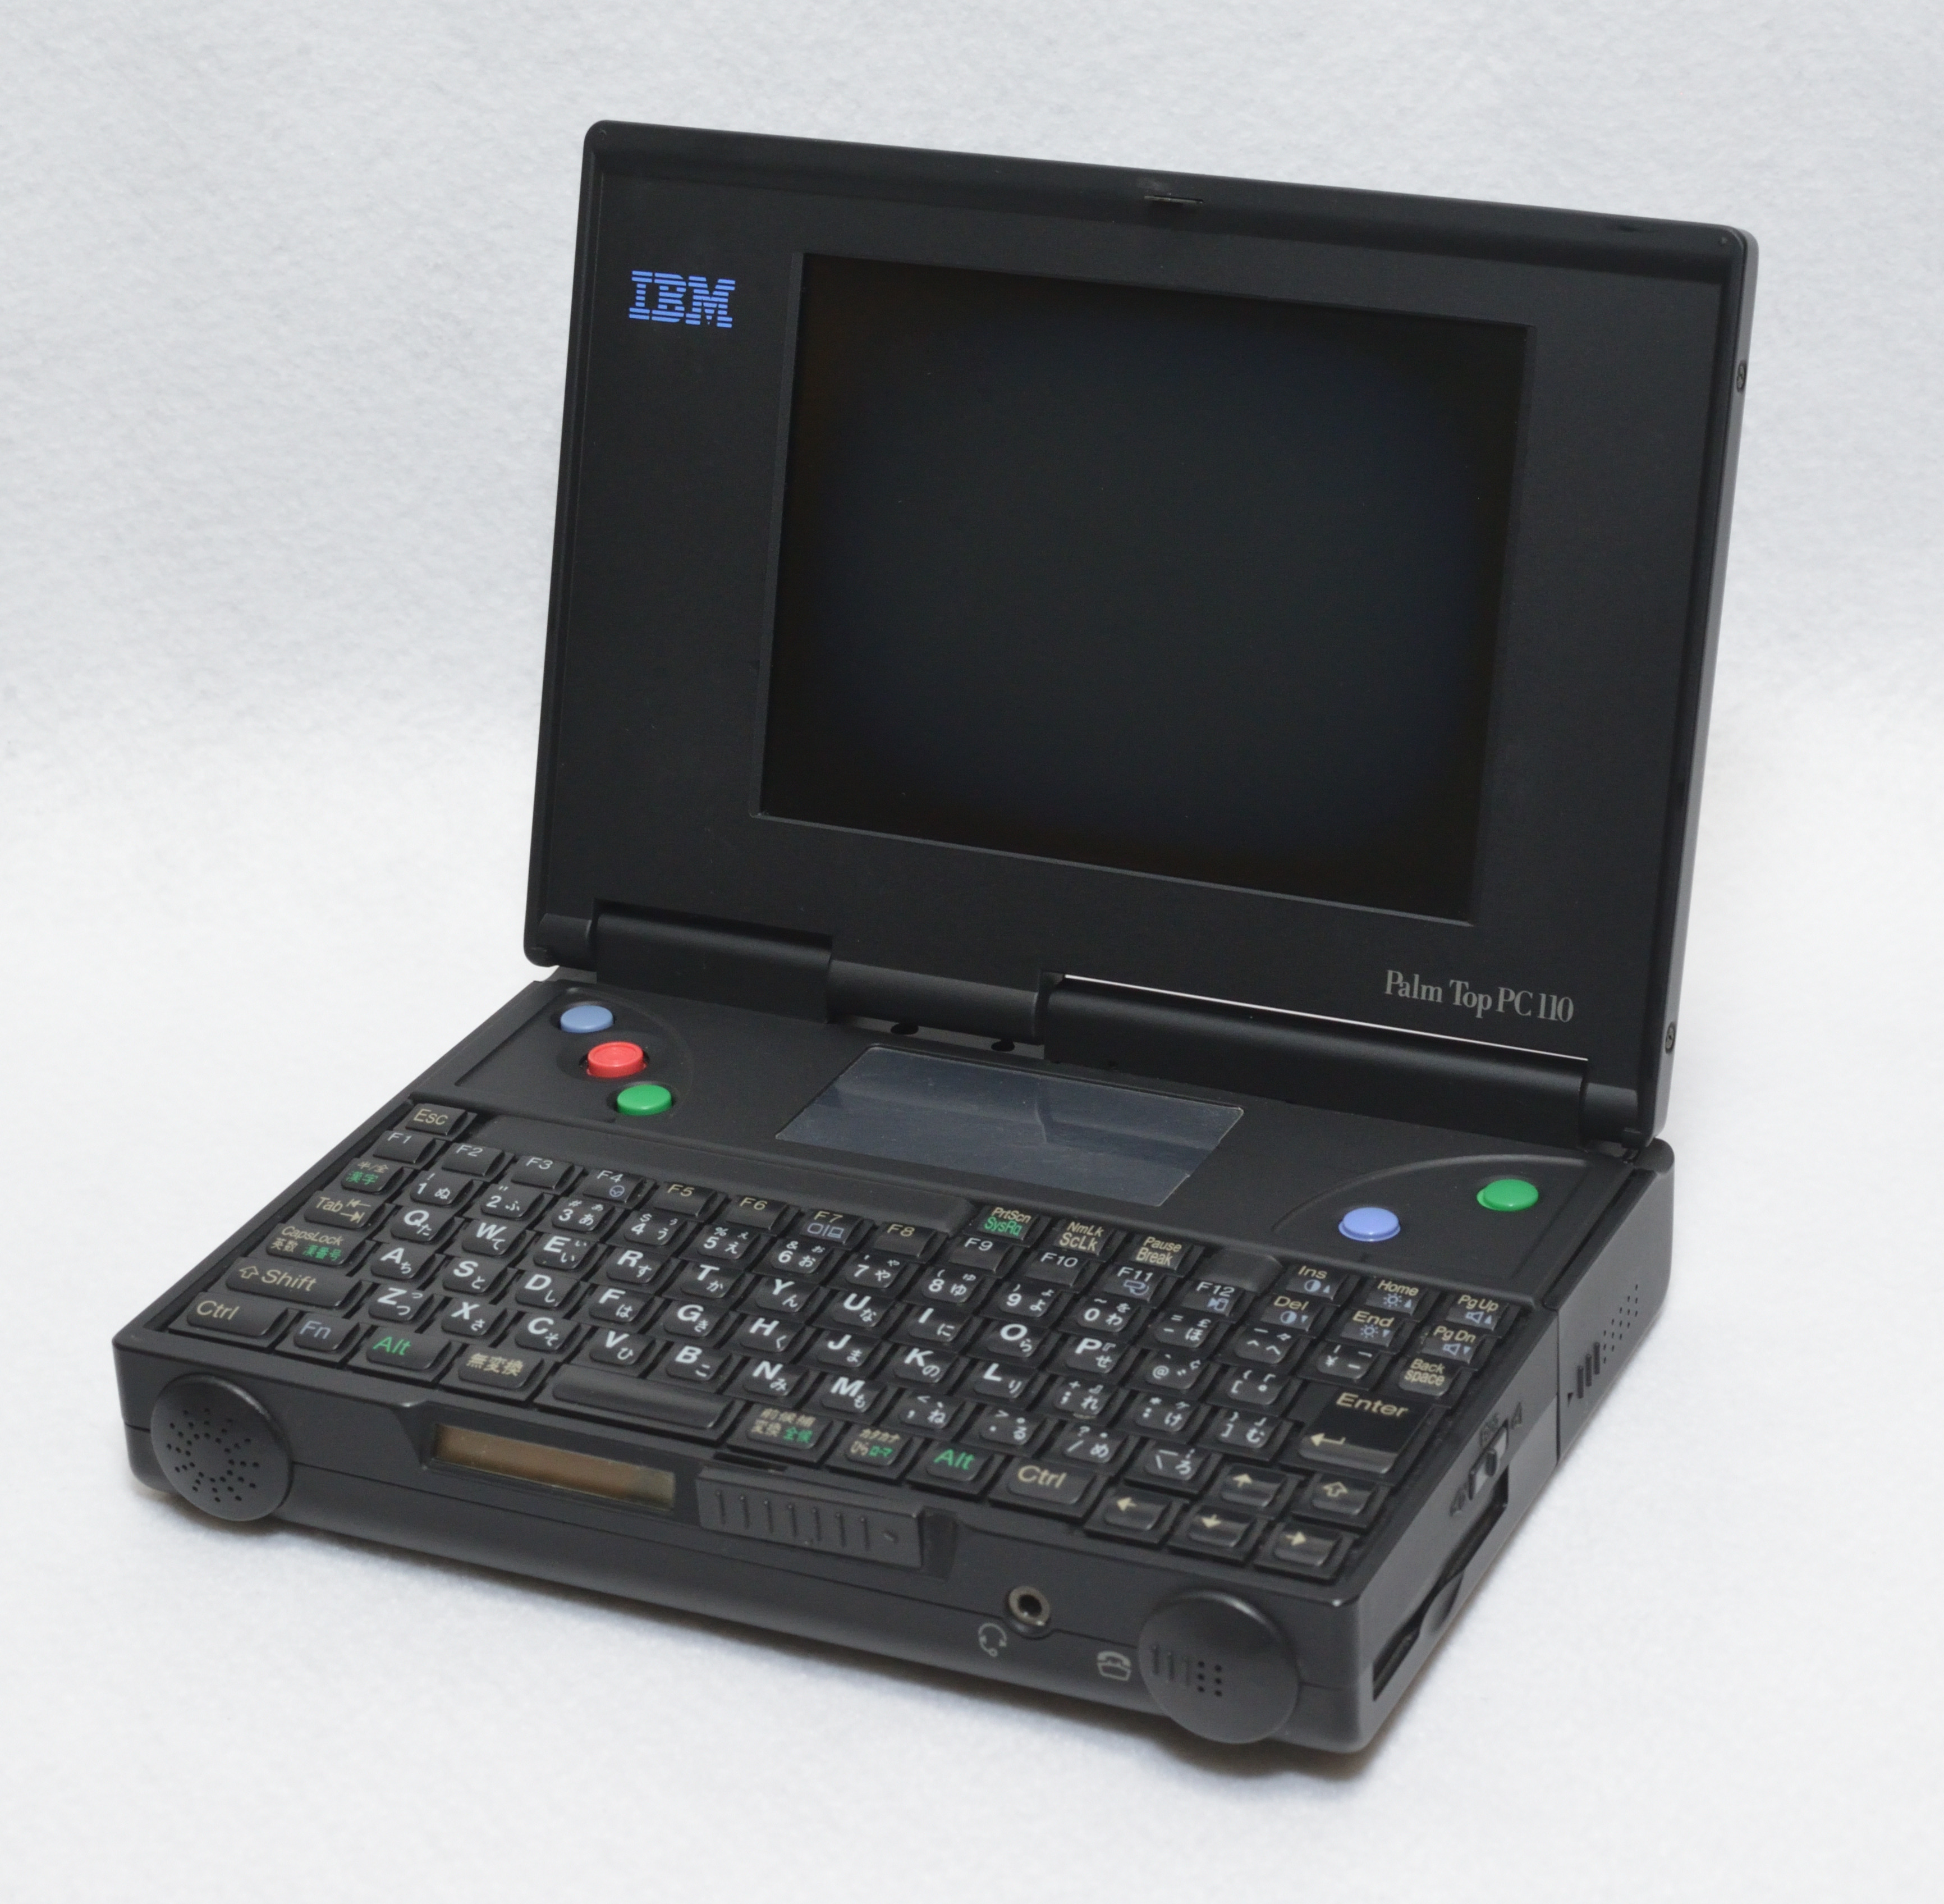 IBM Palm Top PC 110 Wikipedia